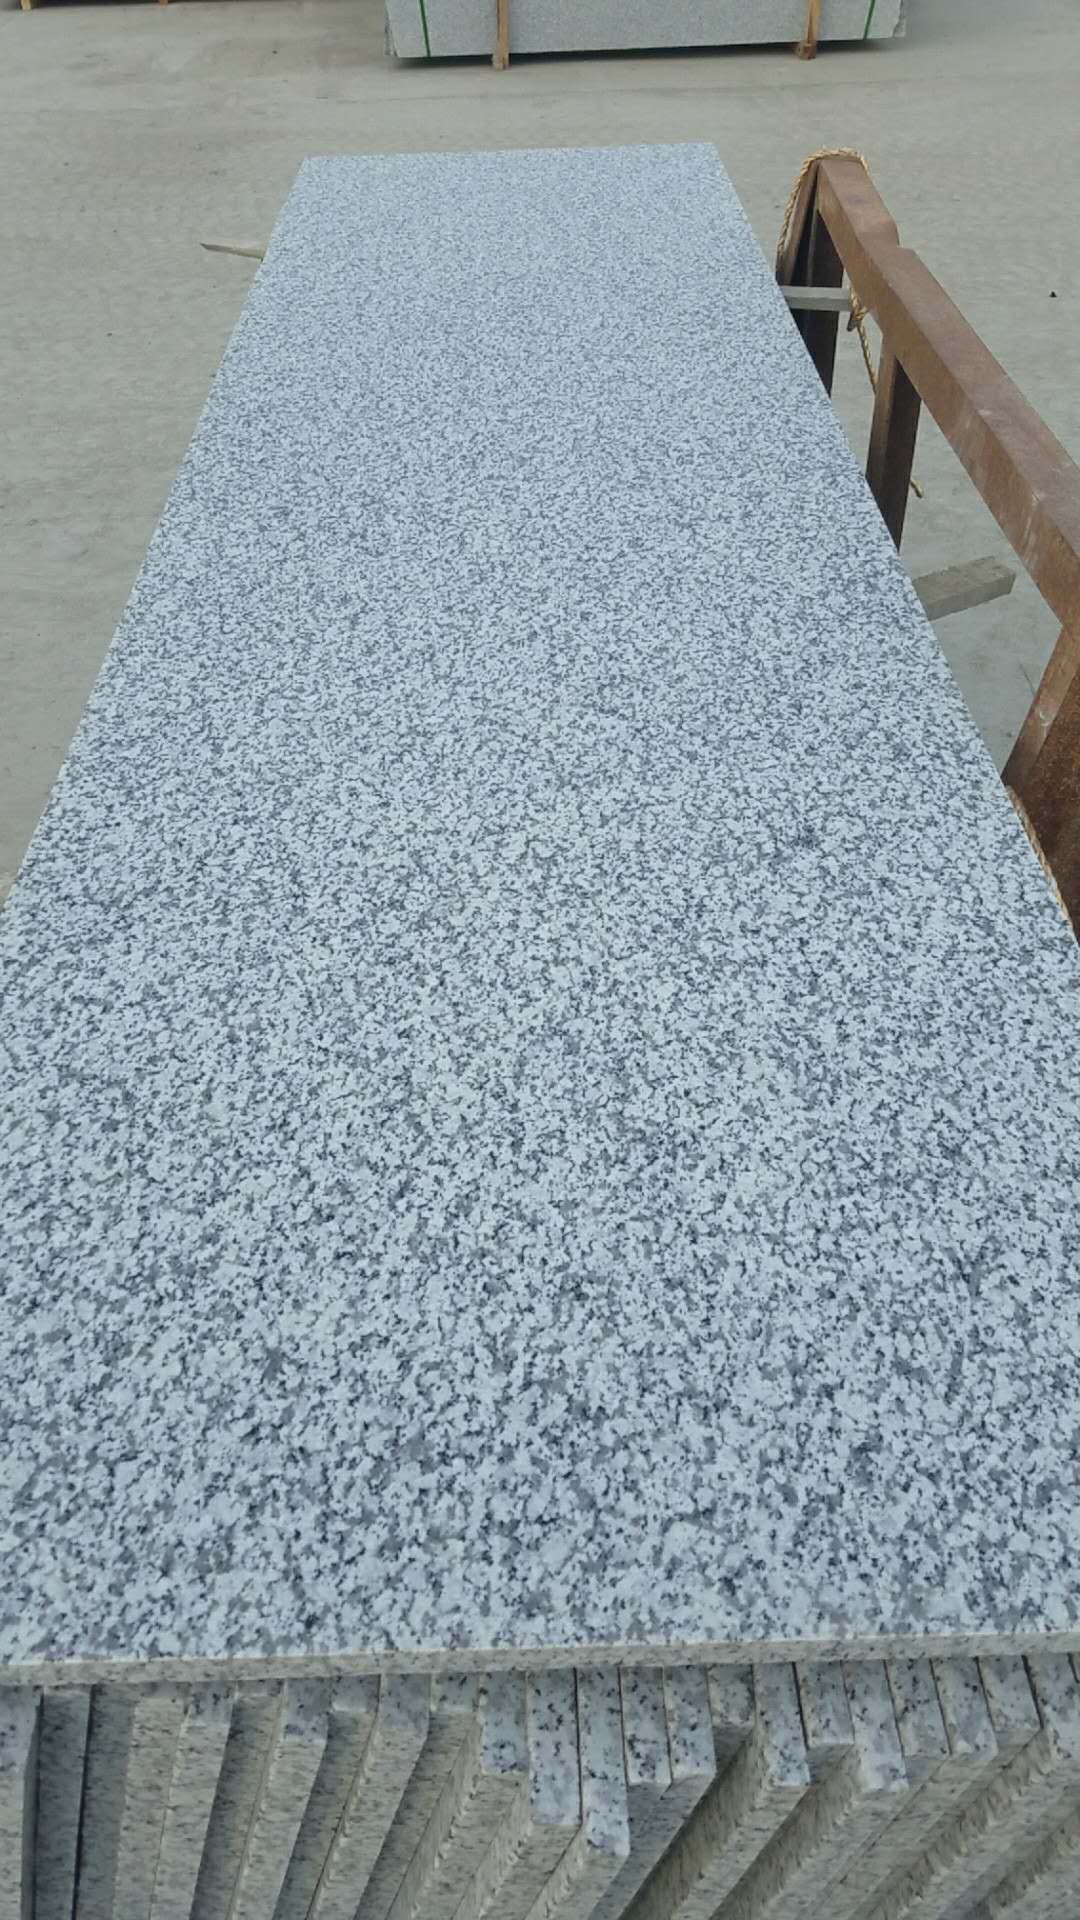 2018 July G603DL granite